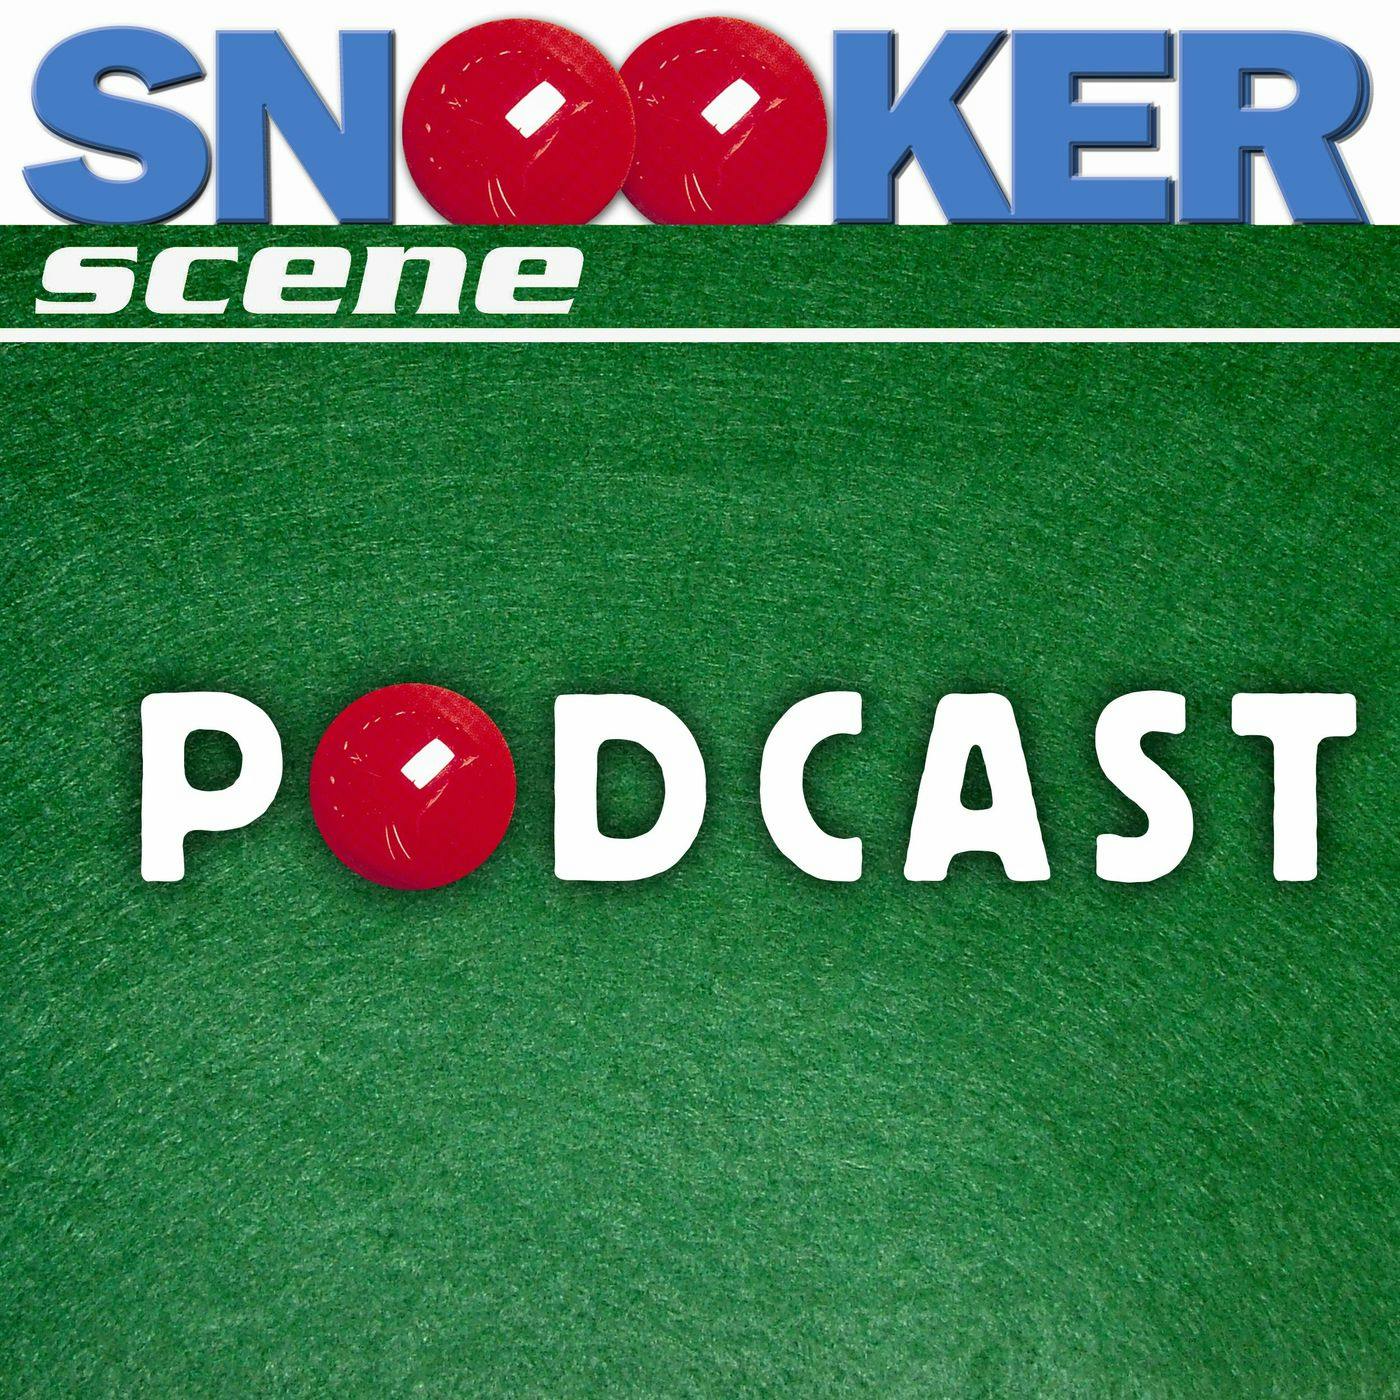 Snooker Scene Podcast episode 108 - Snooker’s Greatest Rivalries